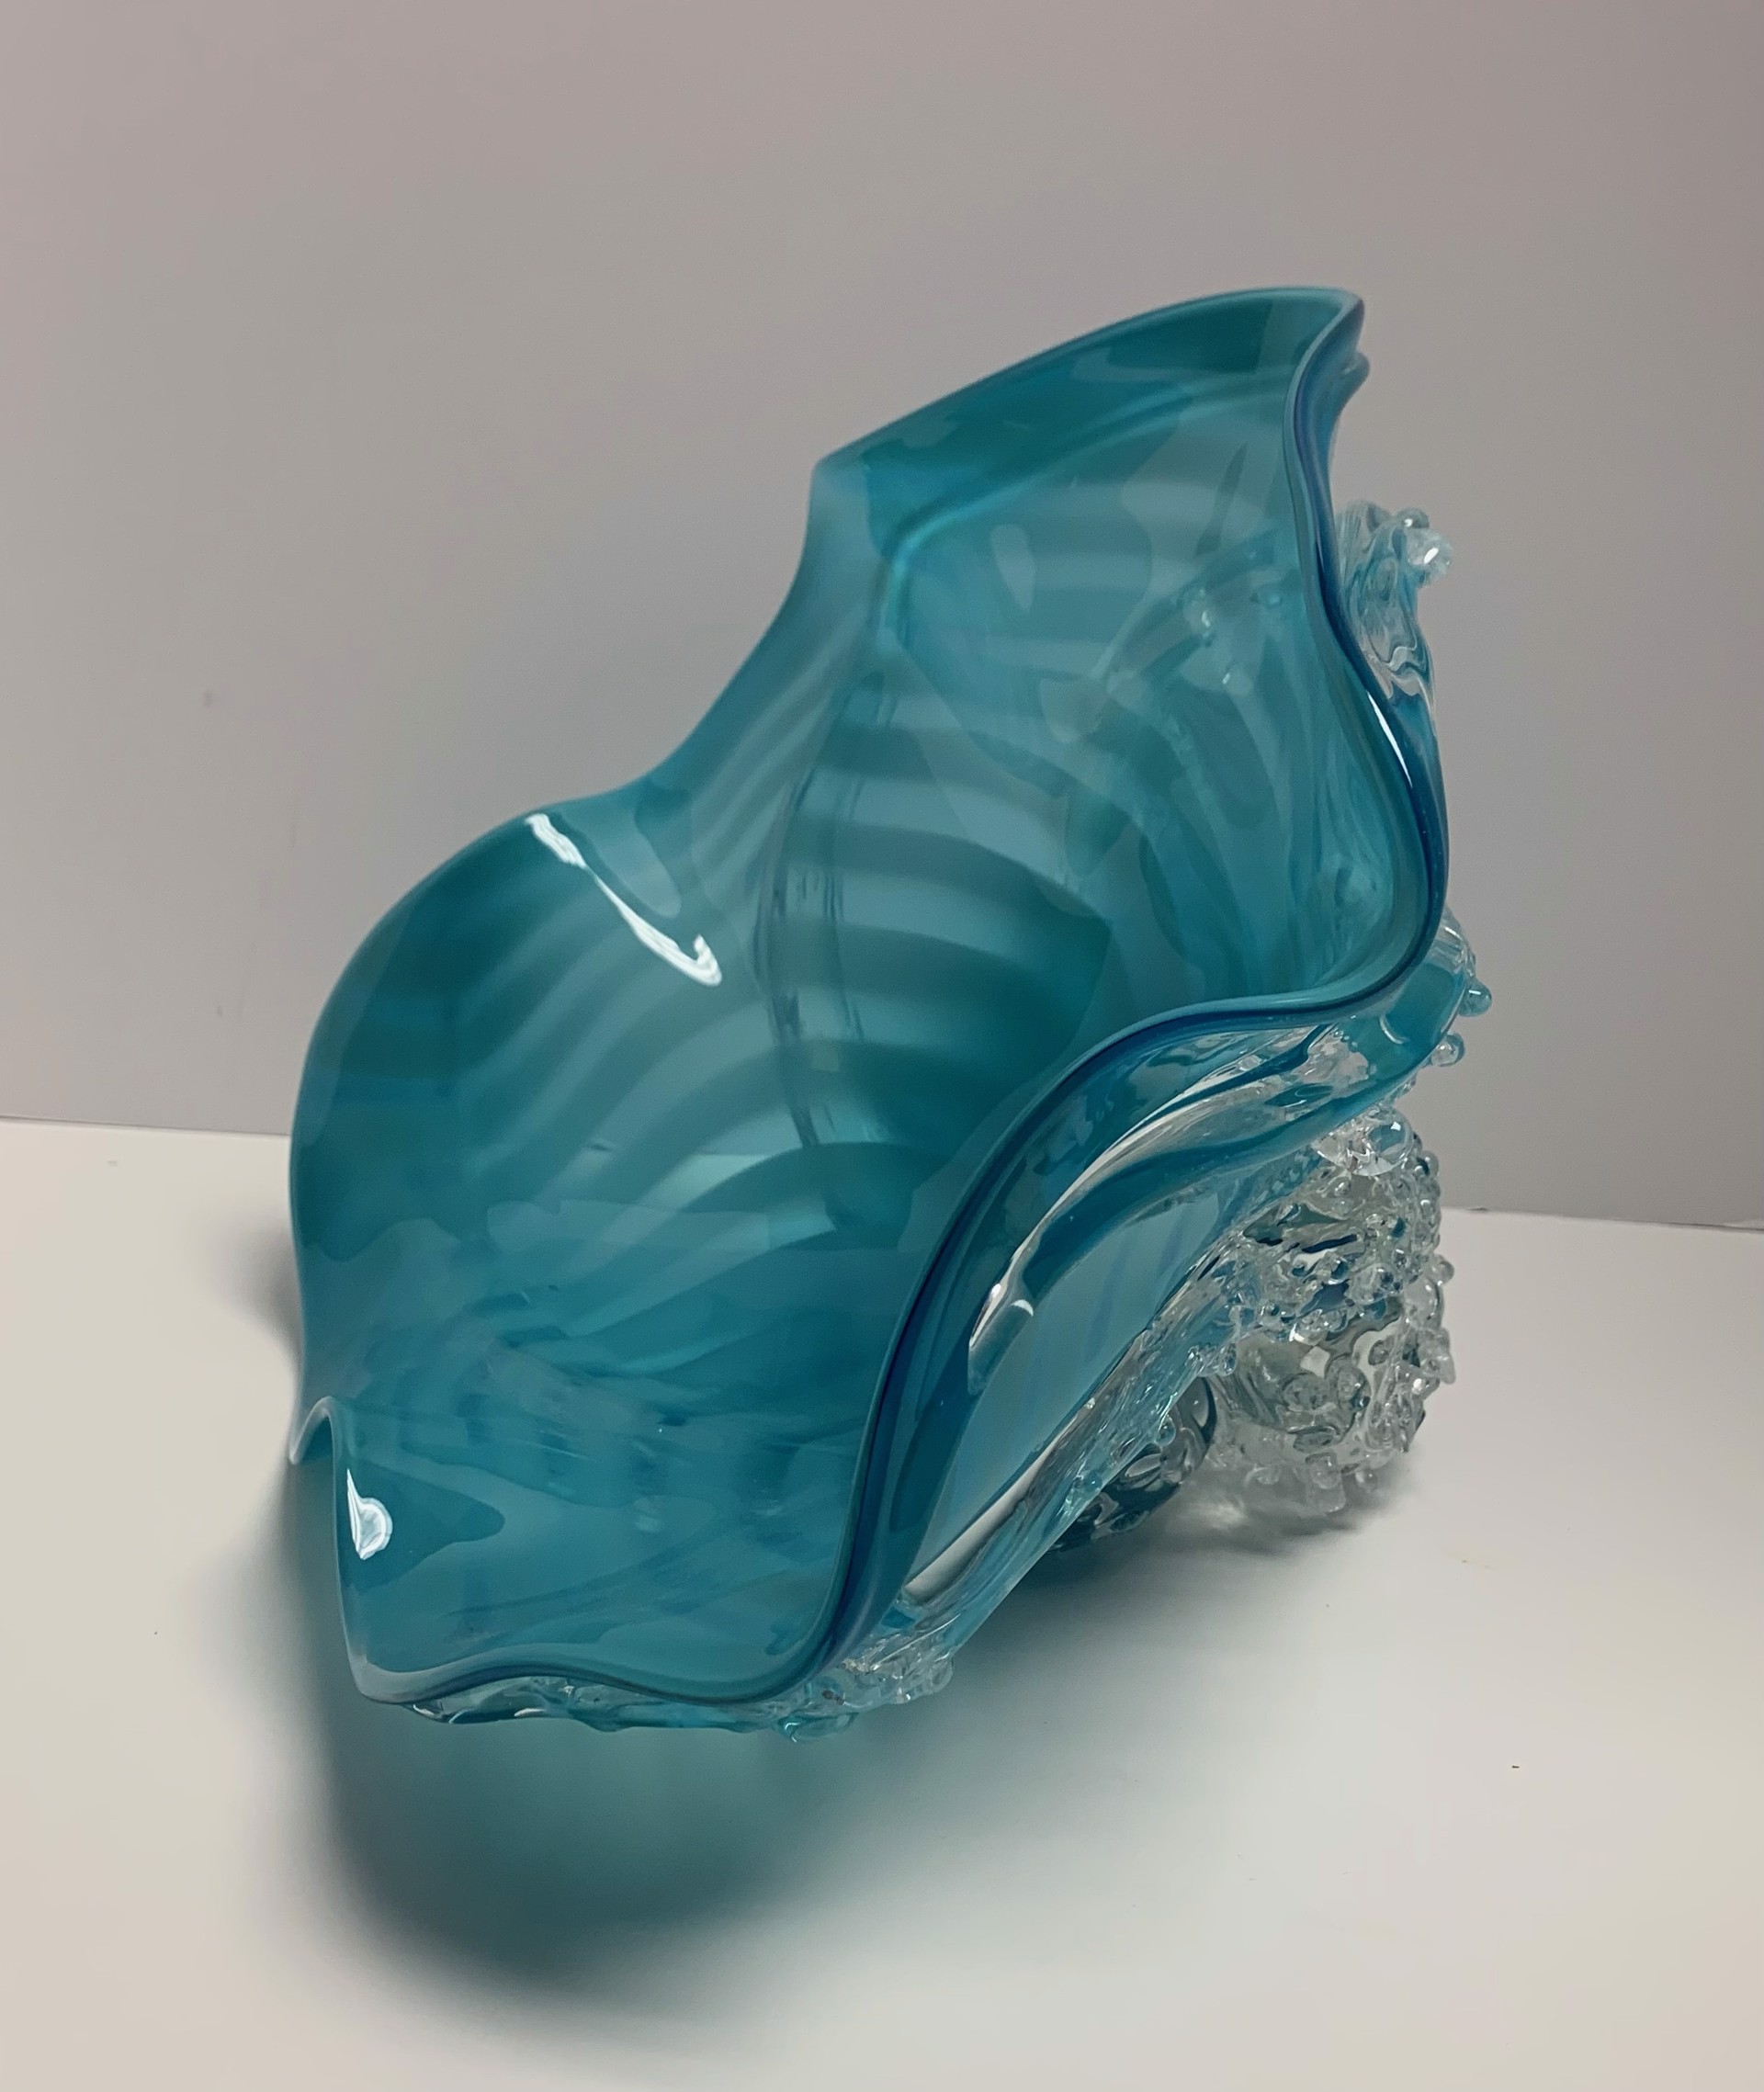 Octo Shell (aqua) by Will Dexter